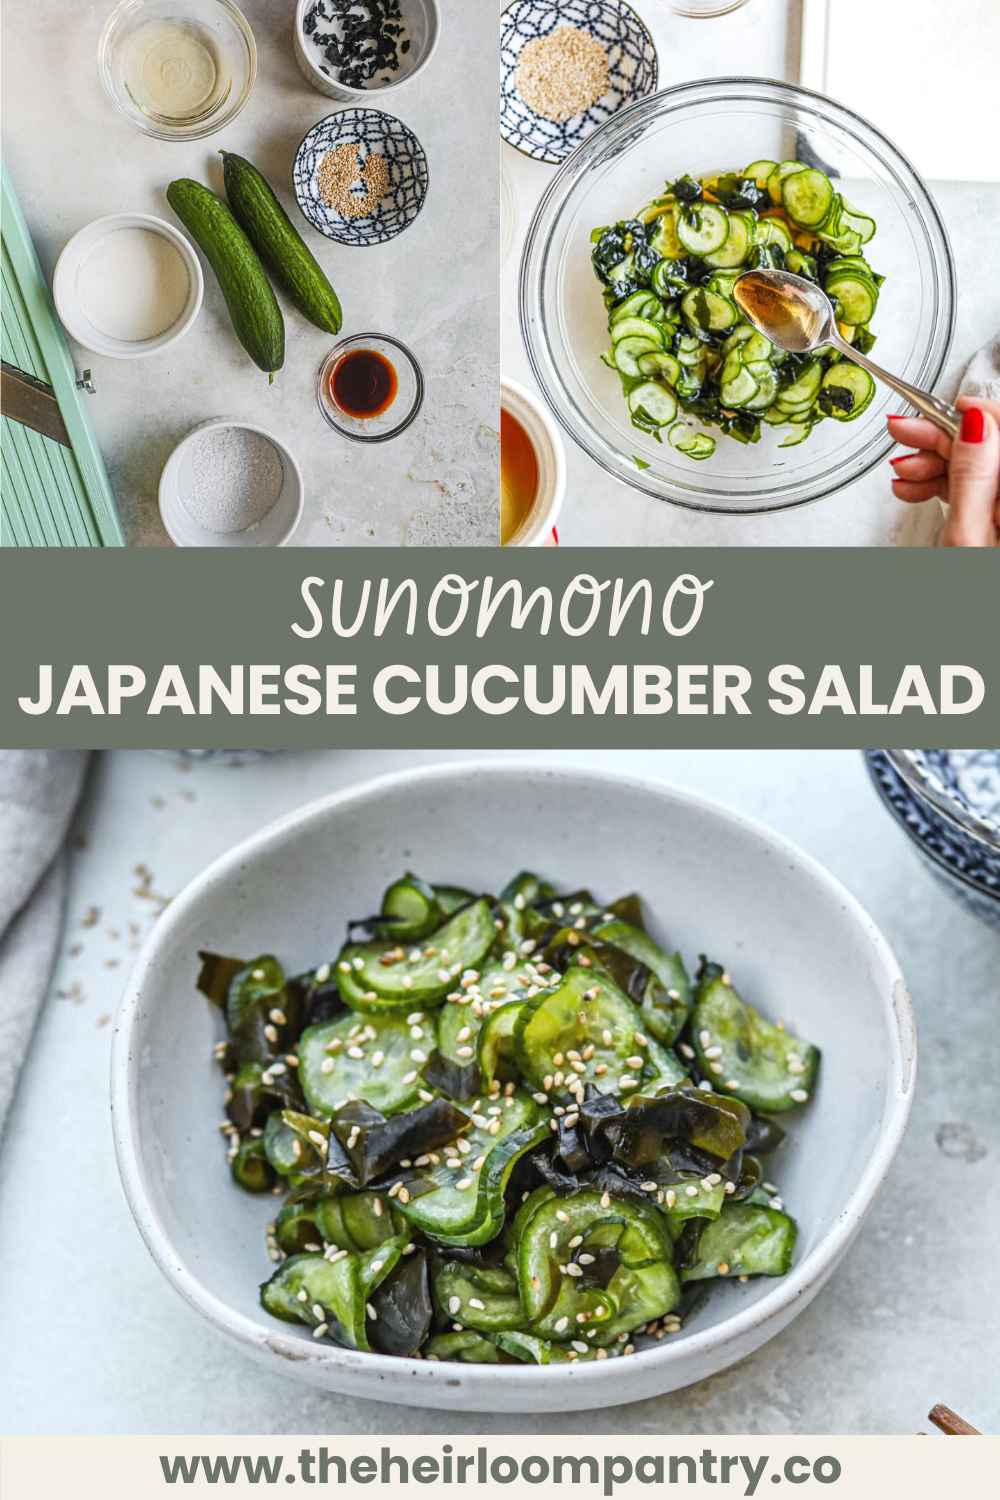 Sunomono Japanese cucumber seaweed salad with sesame seeds Pinterest pin.